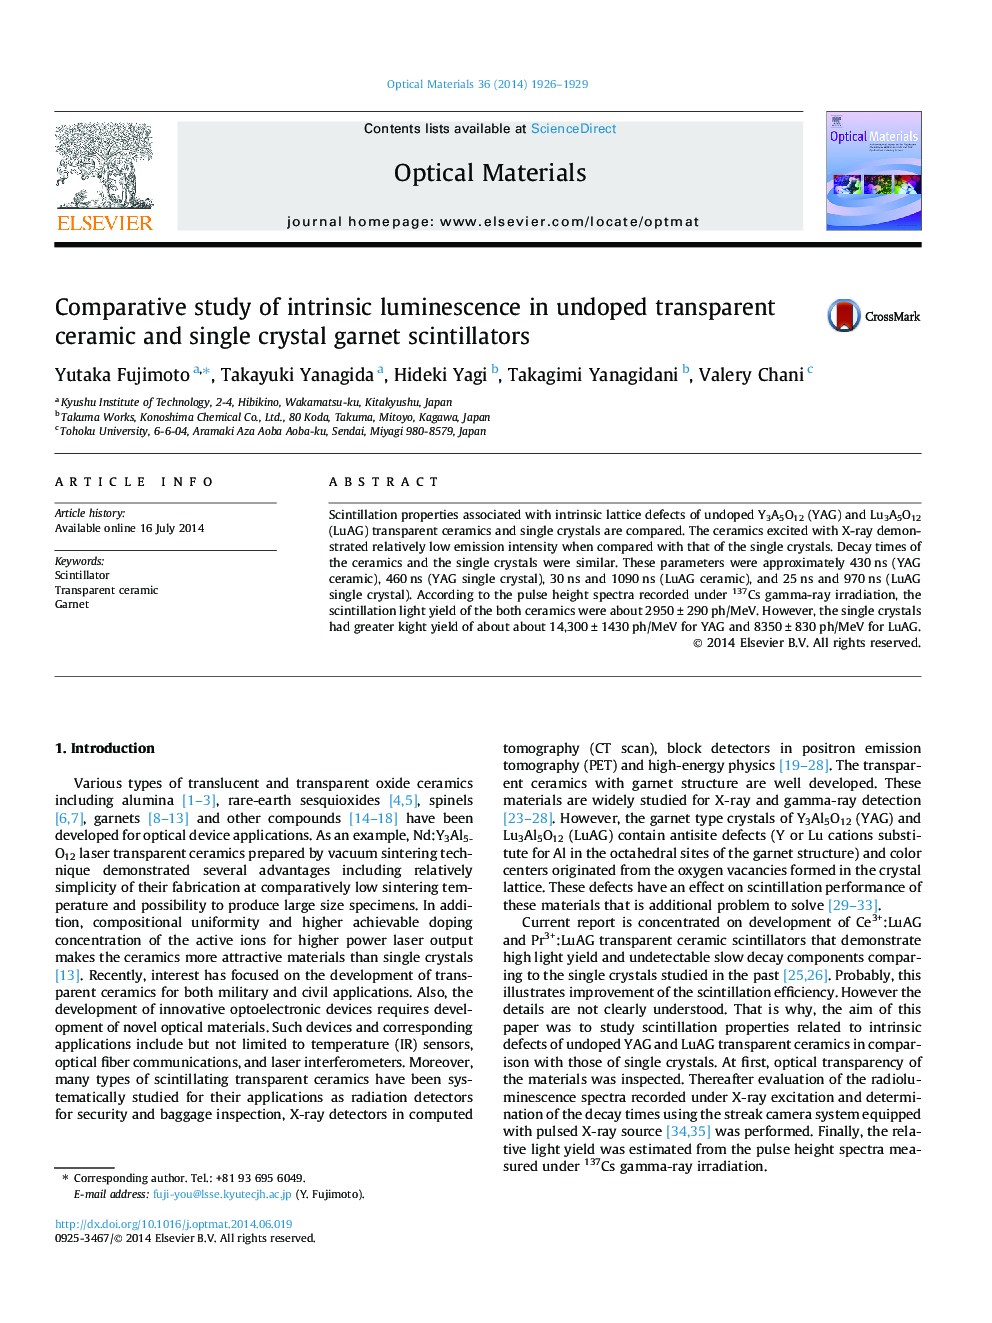 Comparative study of intrinsic luminescence in undoped transparent ceramic and single crystal garnet scintillators